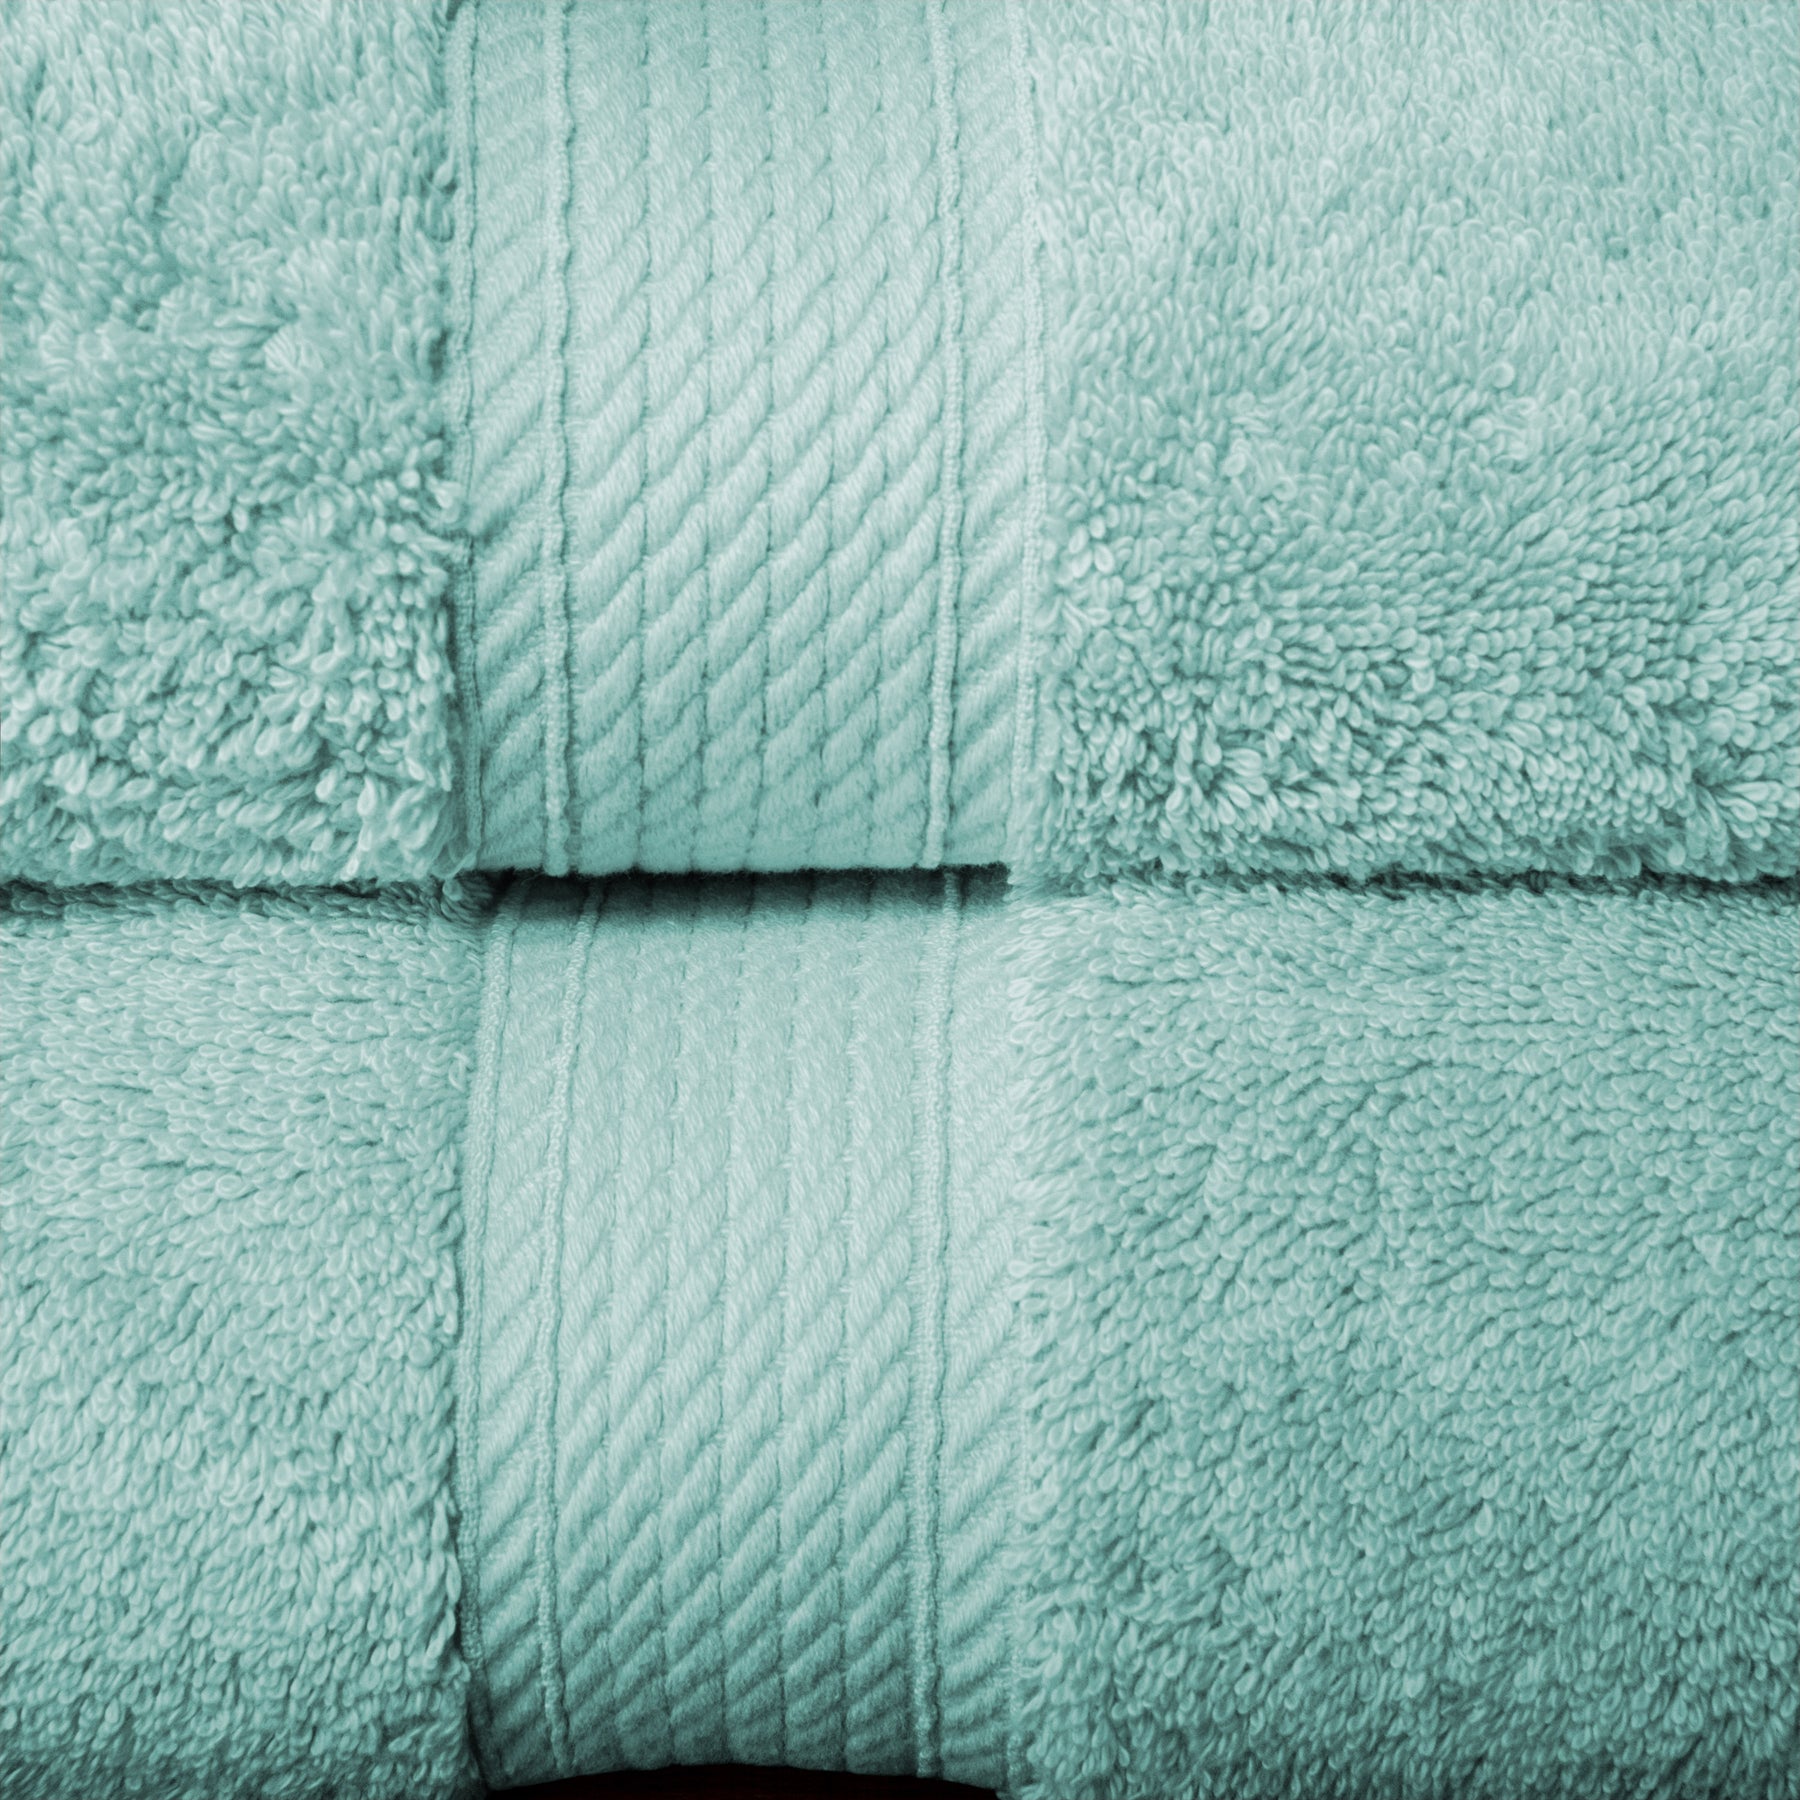 Egyptian Cotton Heavyweight 2 Piece Bath Towel Set - Sea Foam